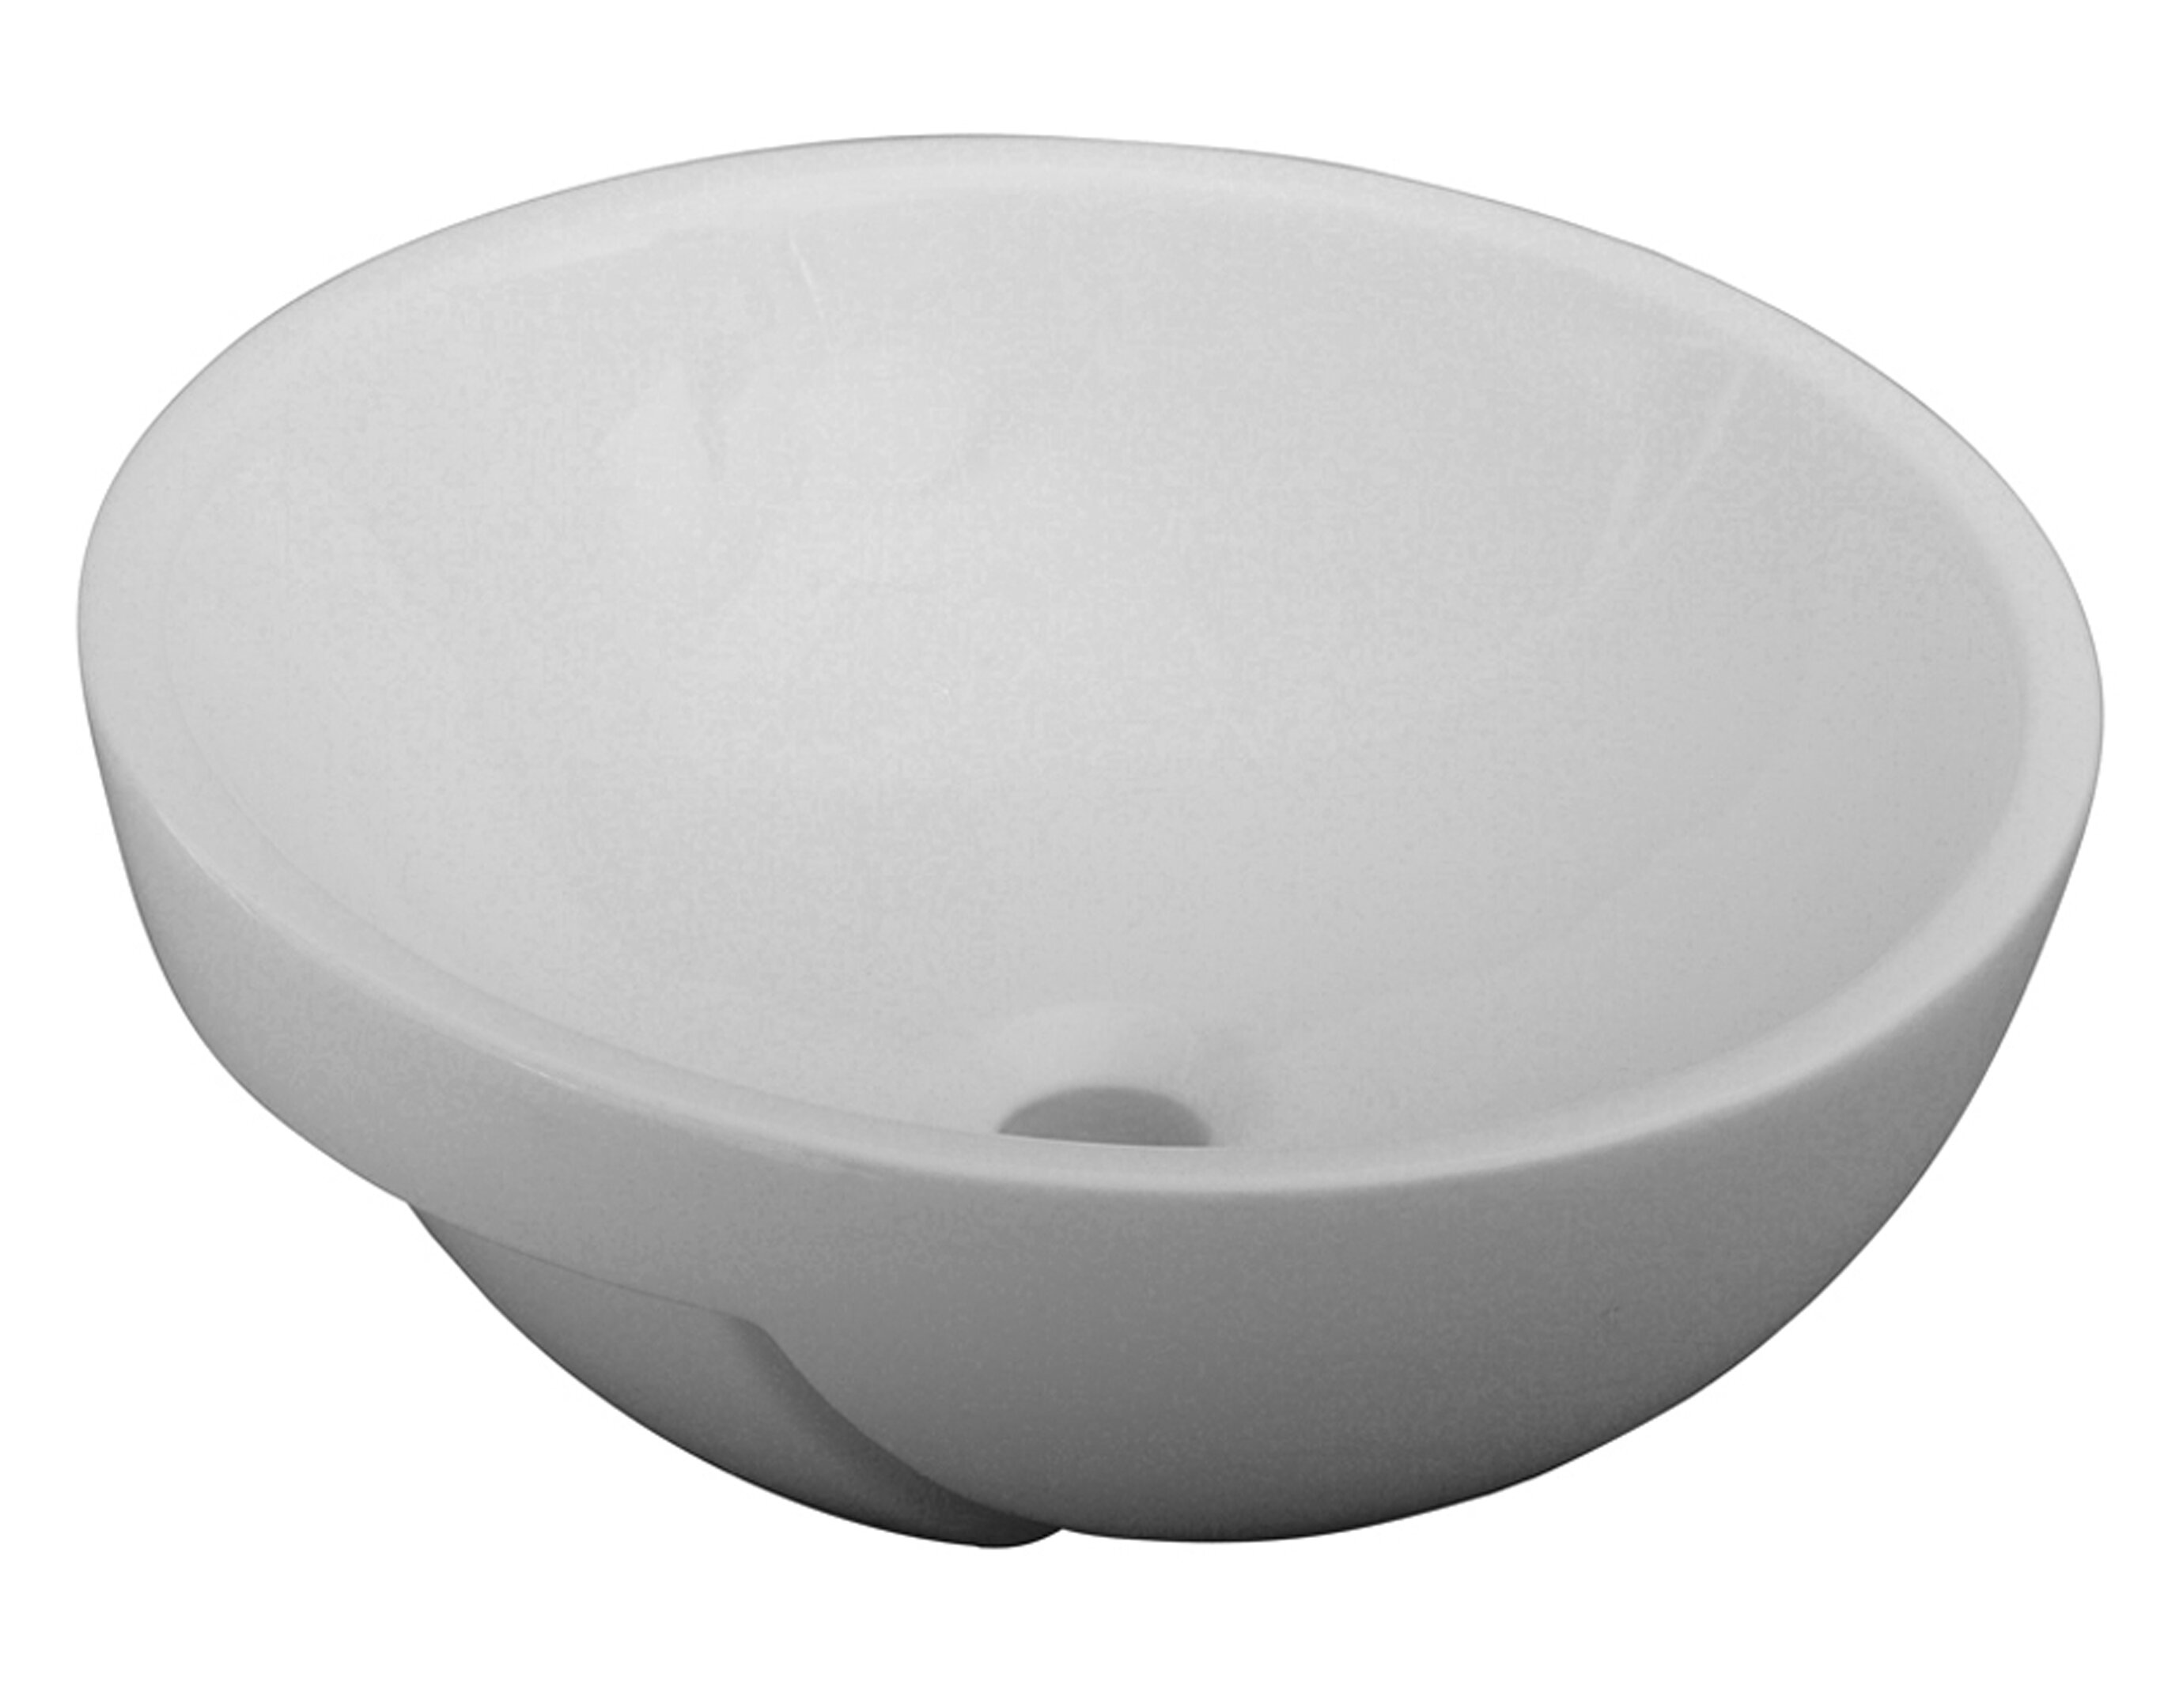 decolav classically redefined white vessel rectangular bathroom sink